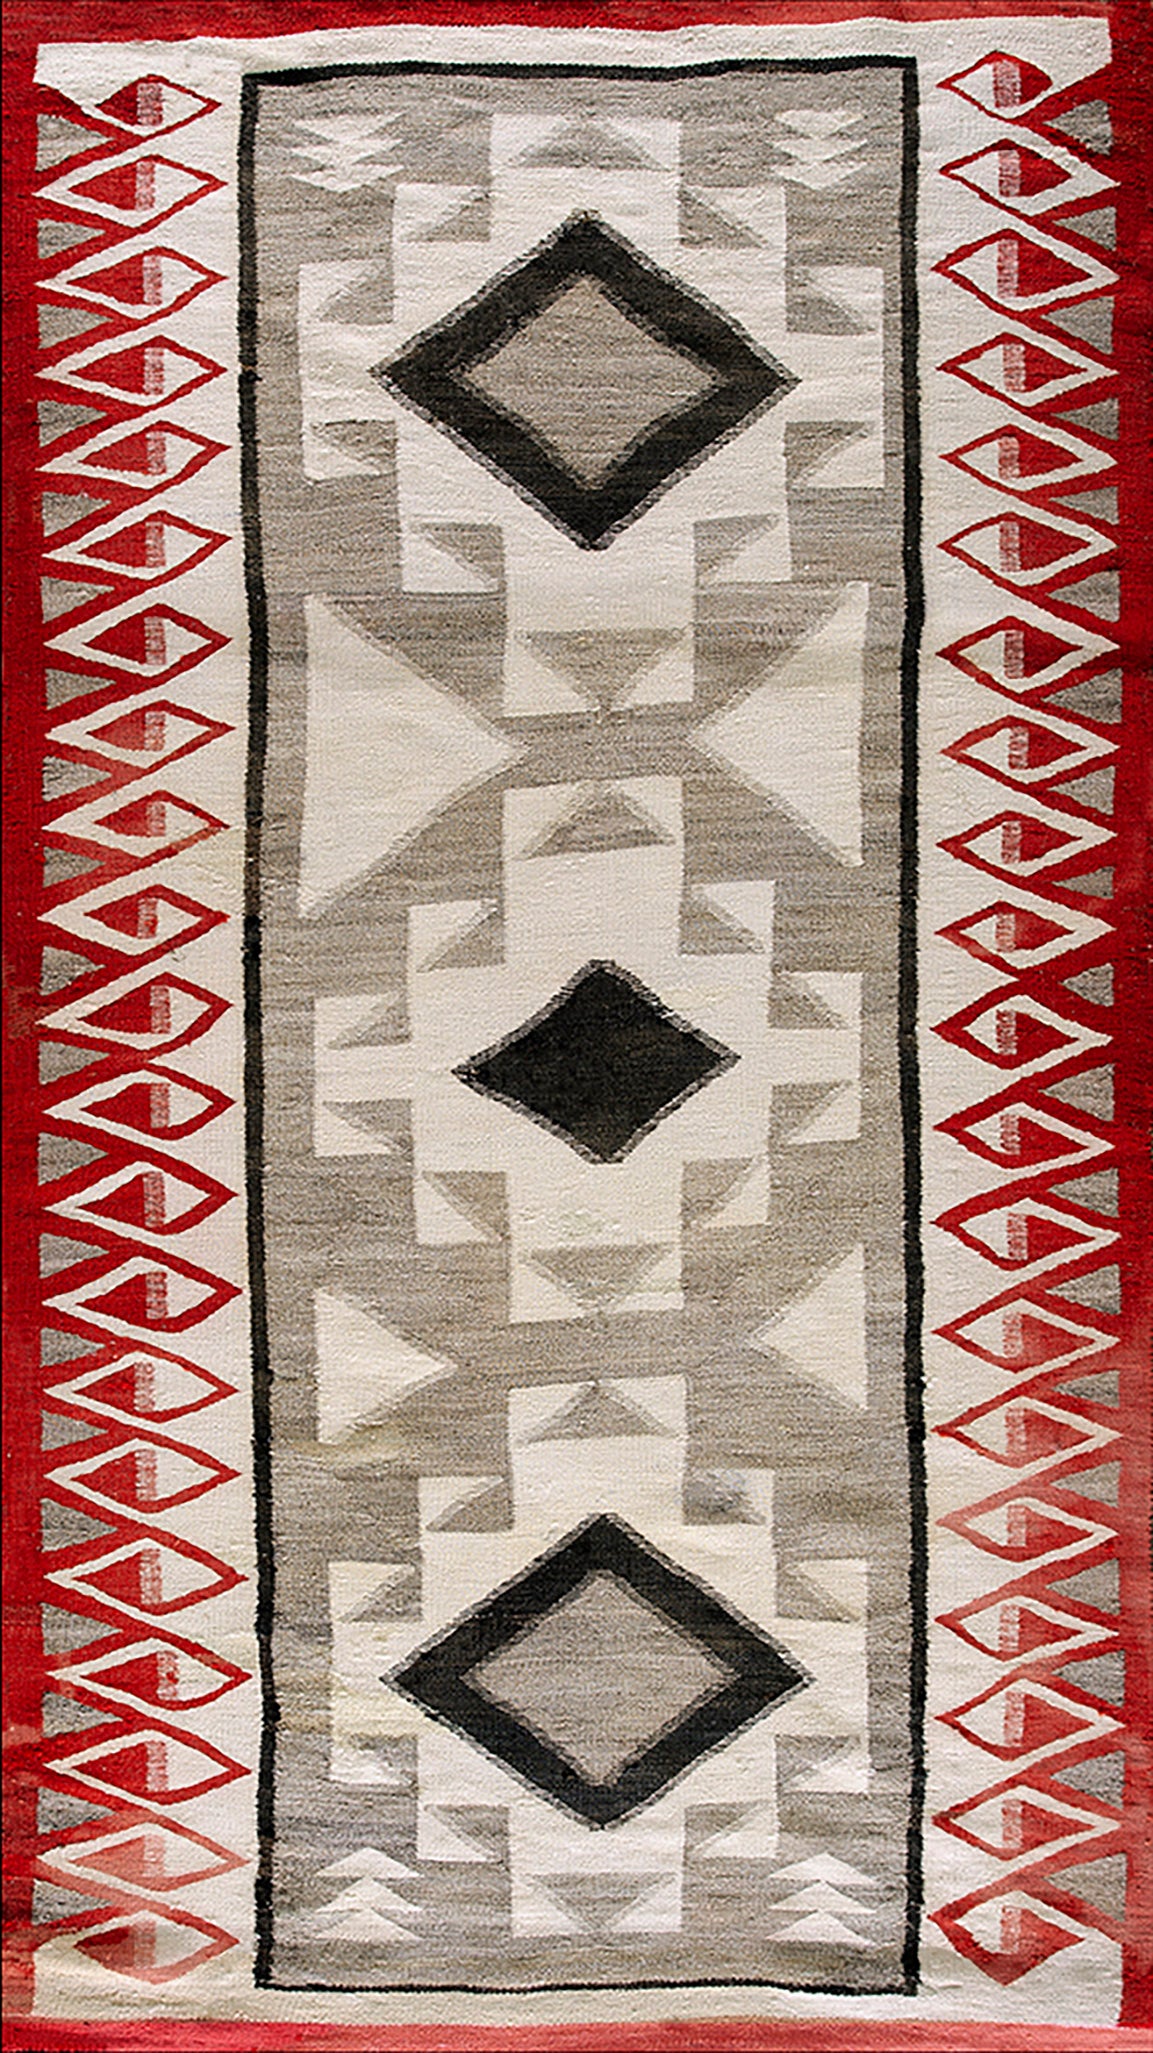 1930s American Navajo Carpet ( 4'9"x 6'9" - 15 x 205 cm )